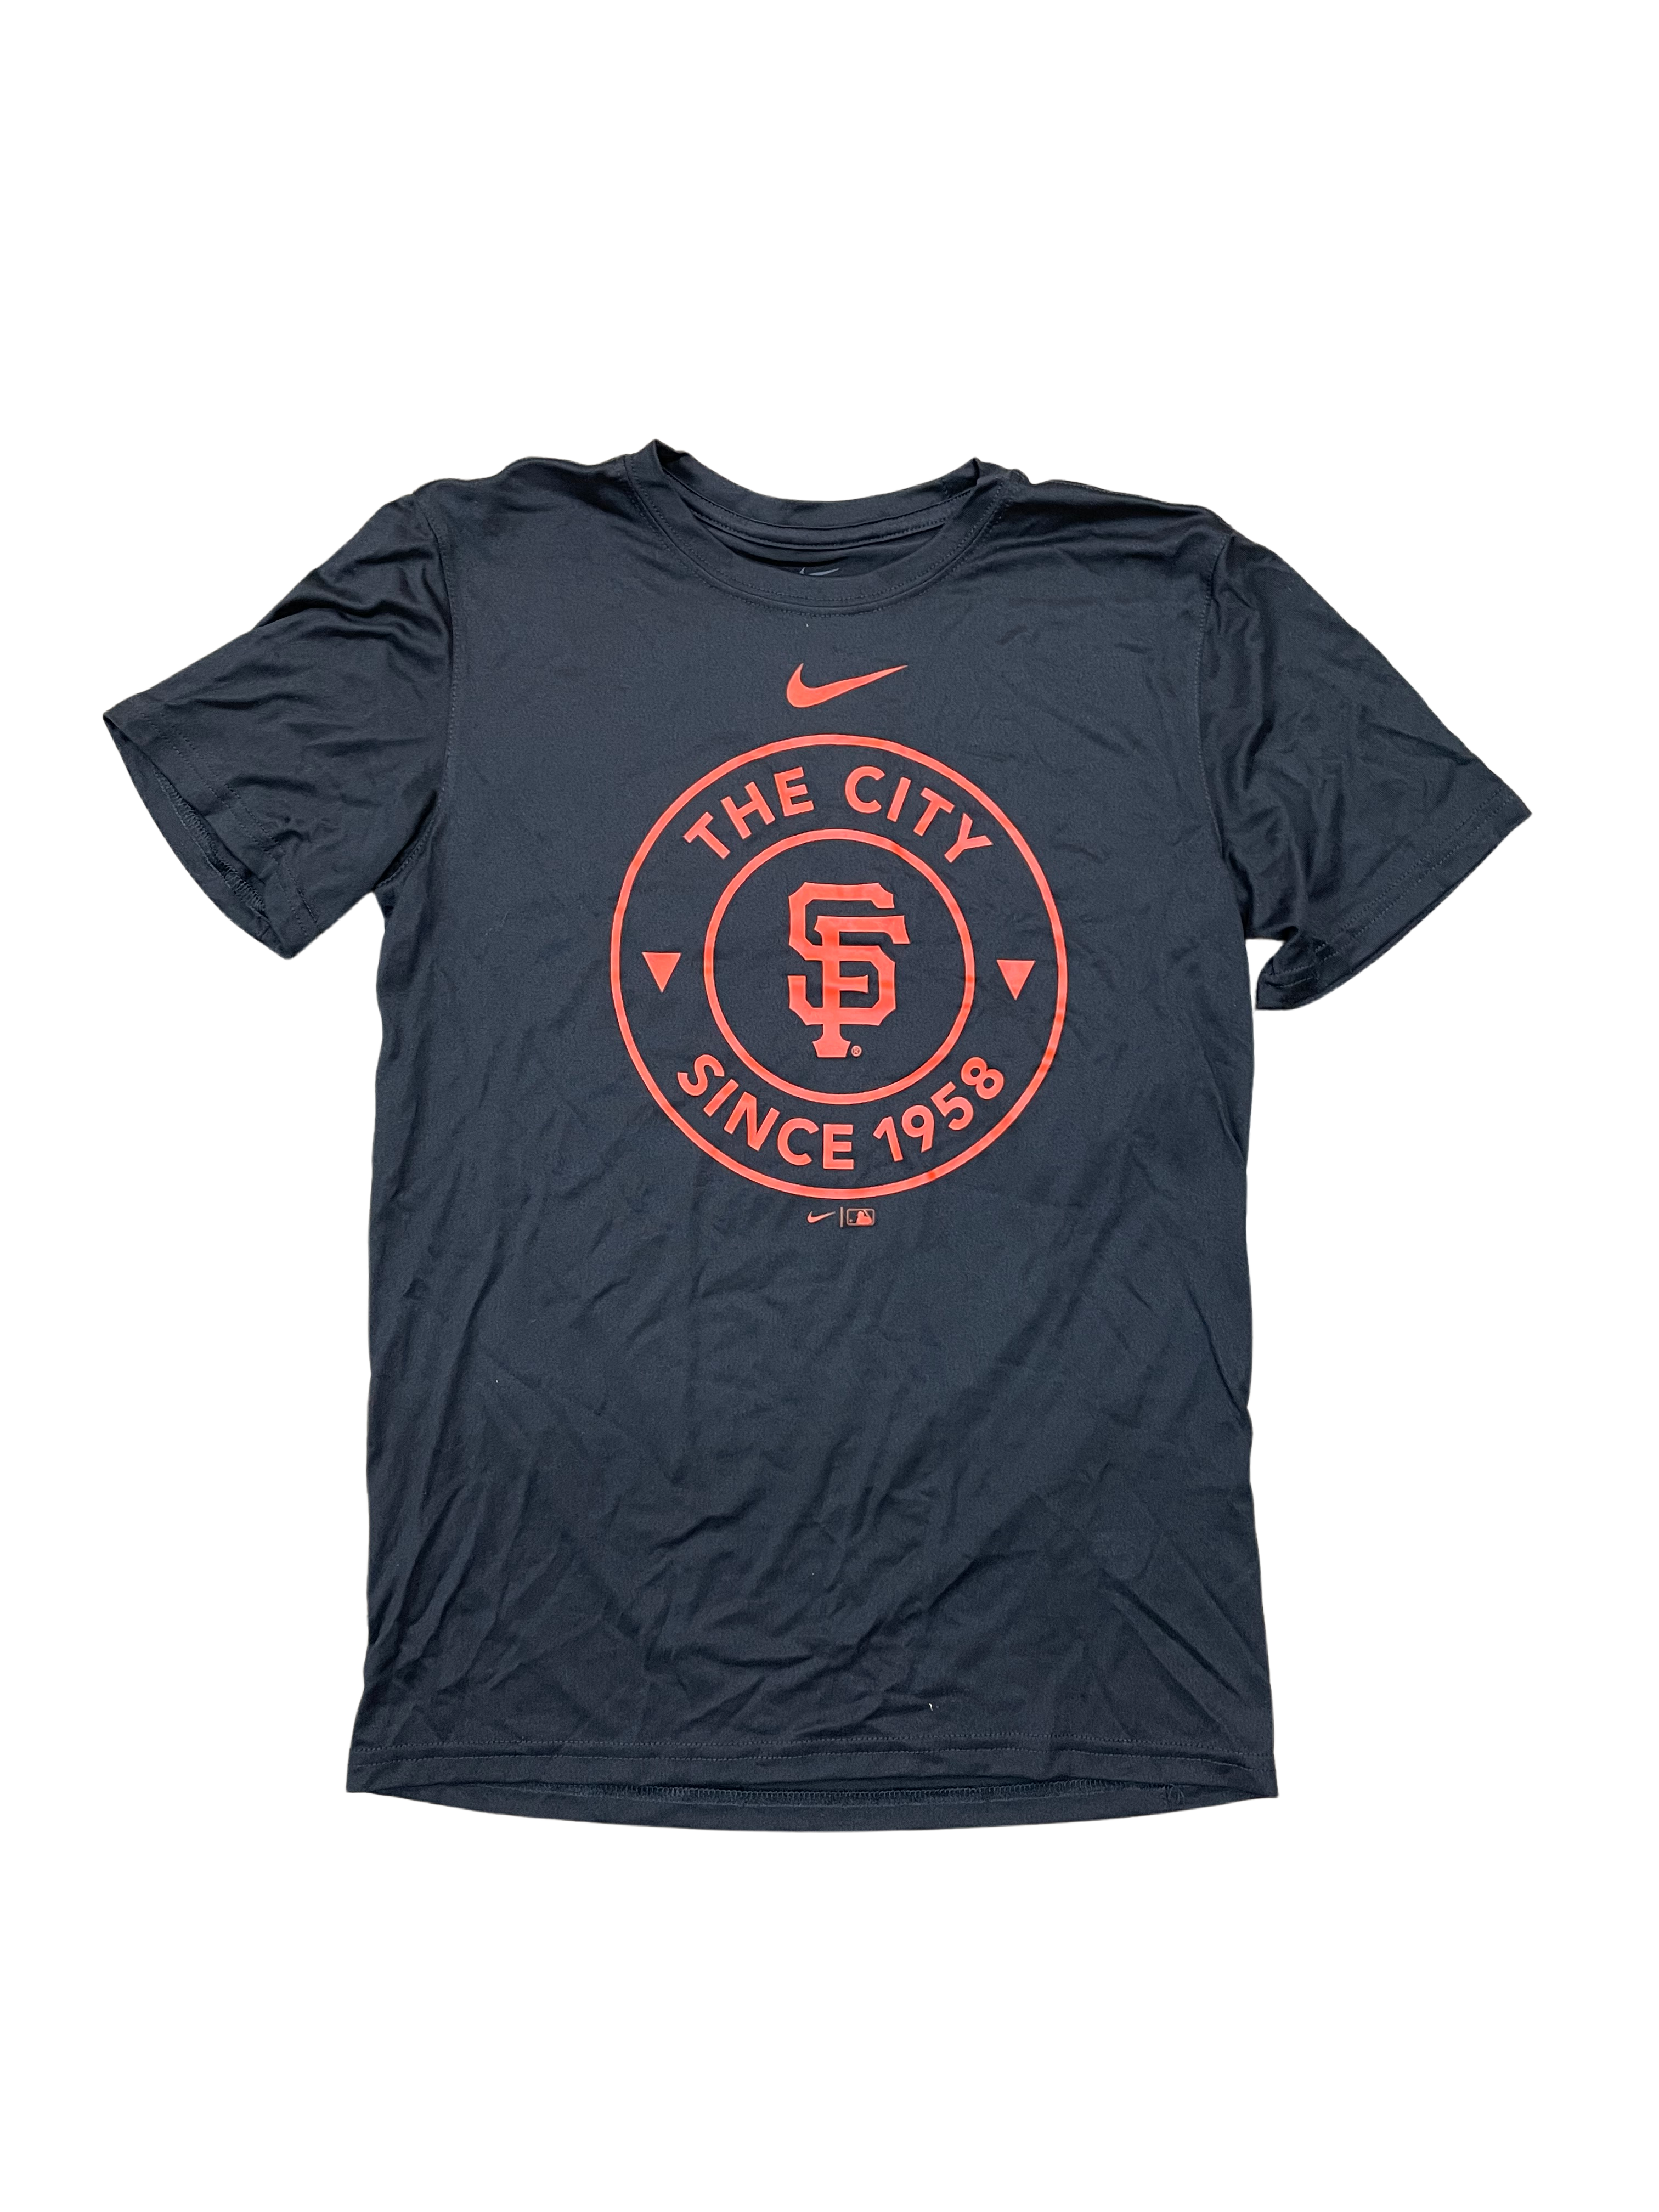 Nike San Francisco Giants The City Est 1958 Performance T-Shirt - Black